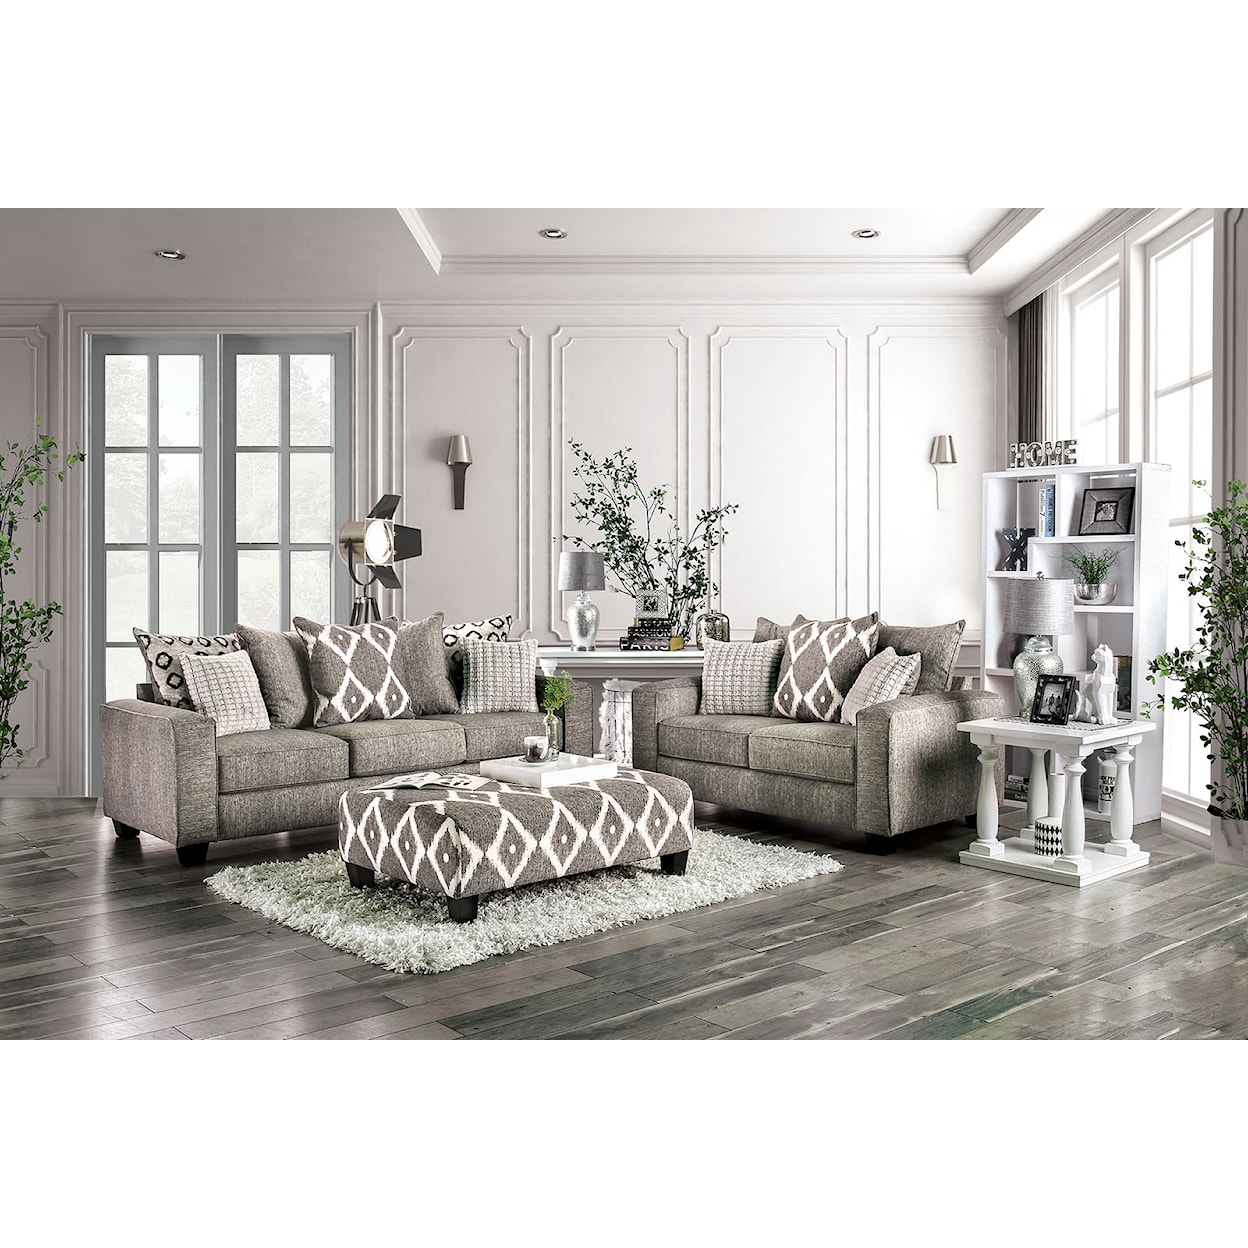 Furniture of America Basie Sofa